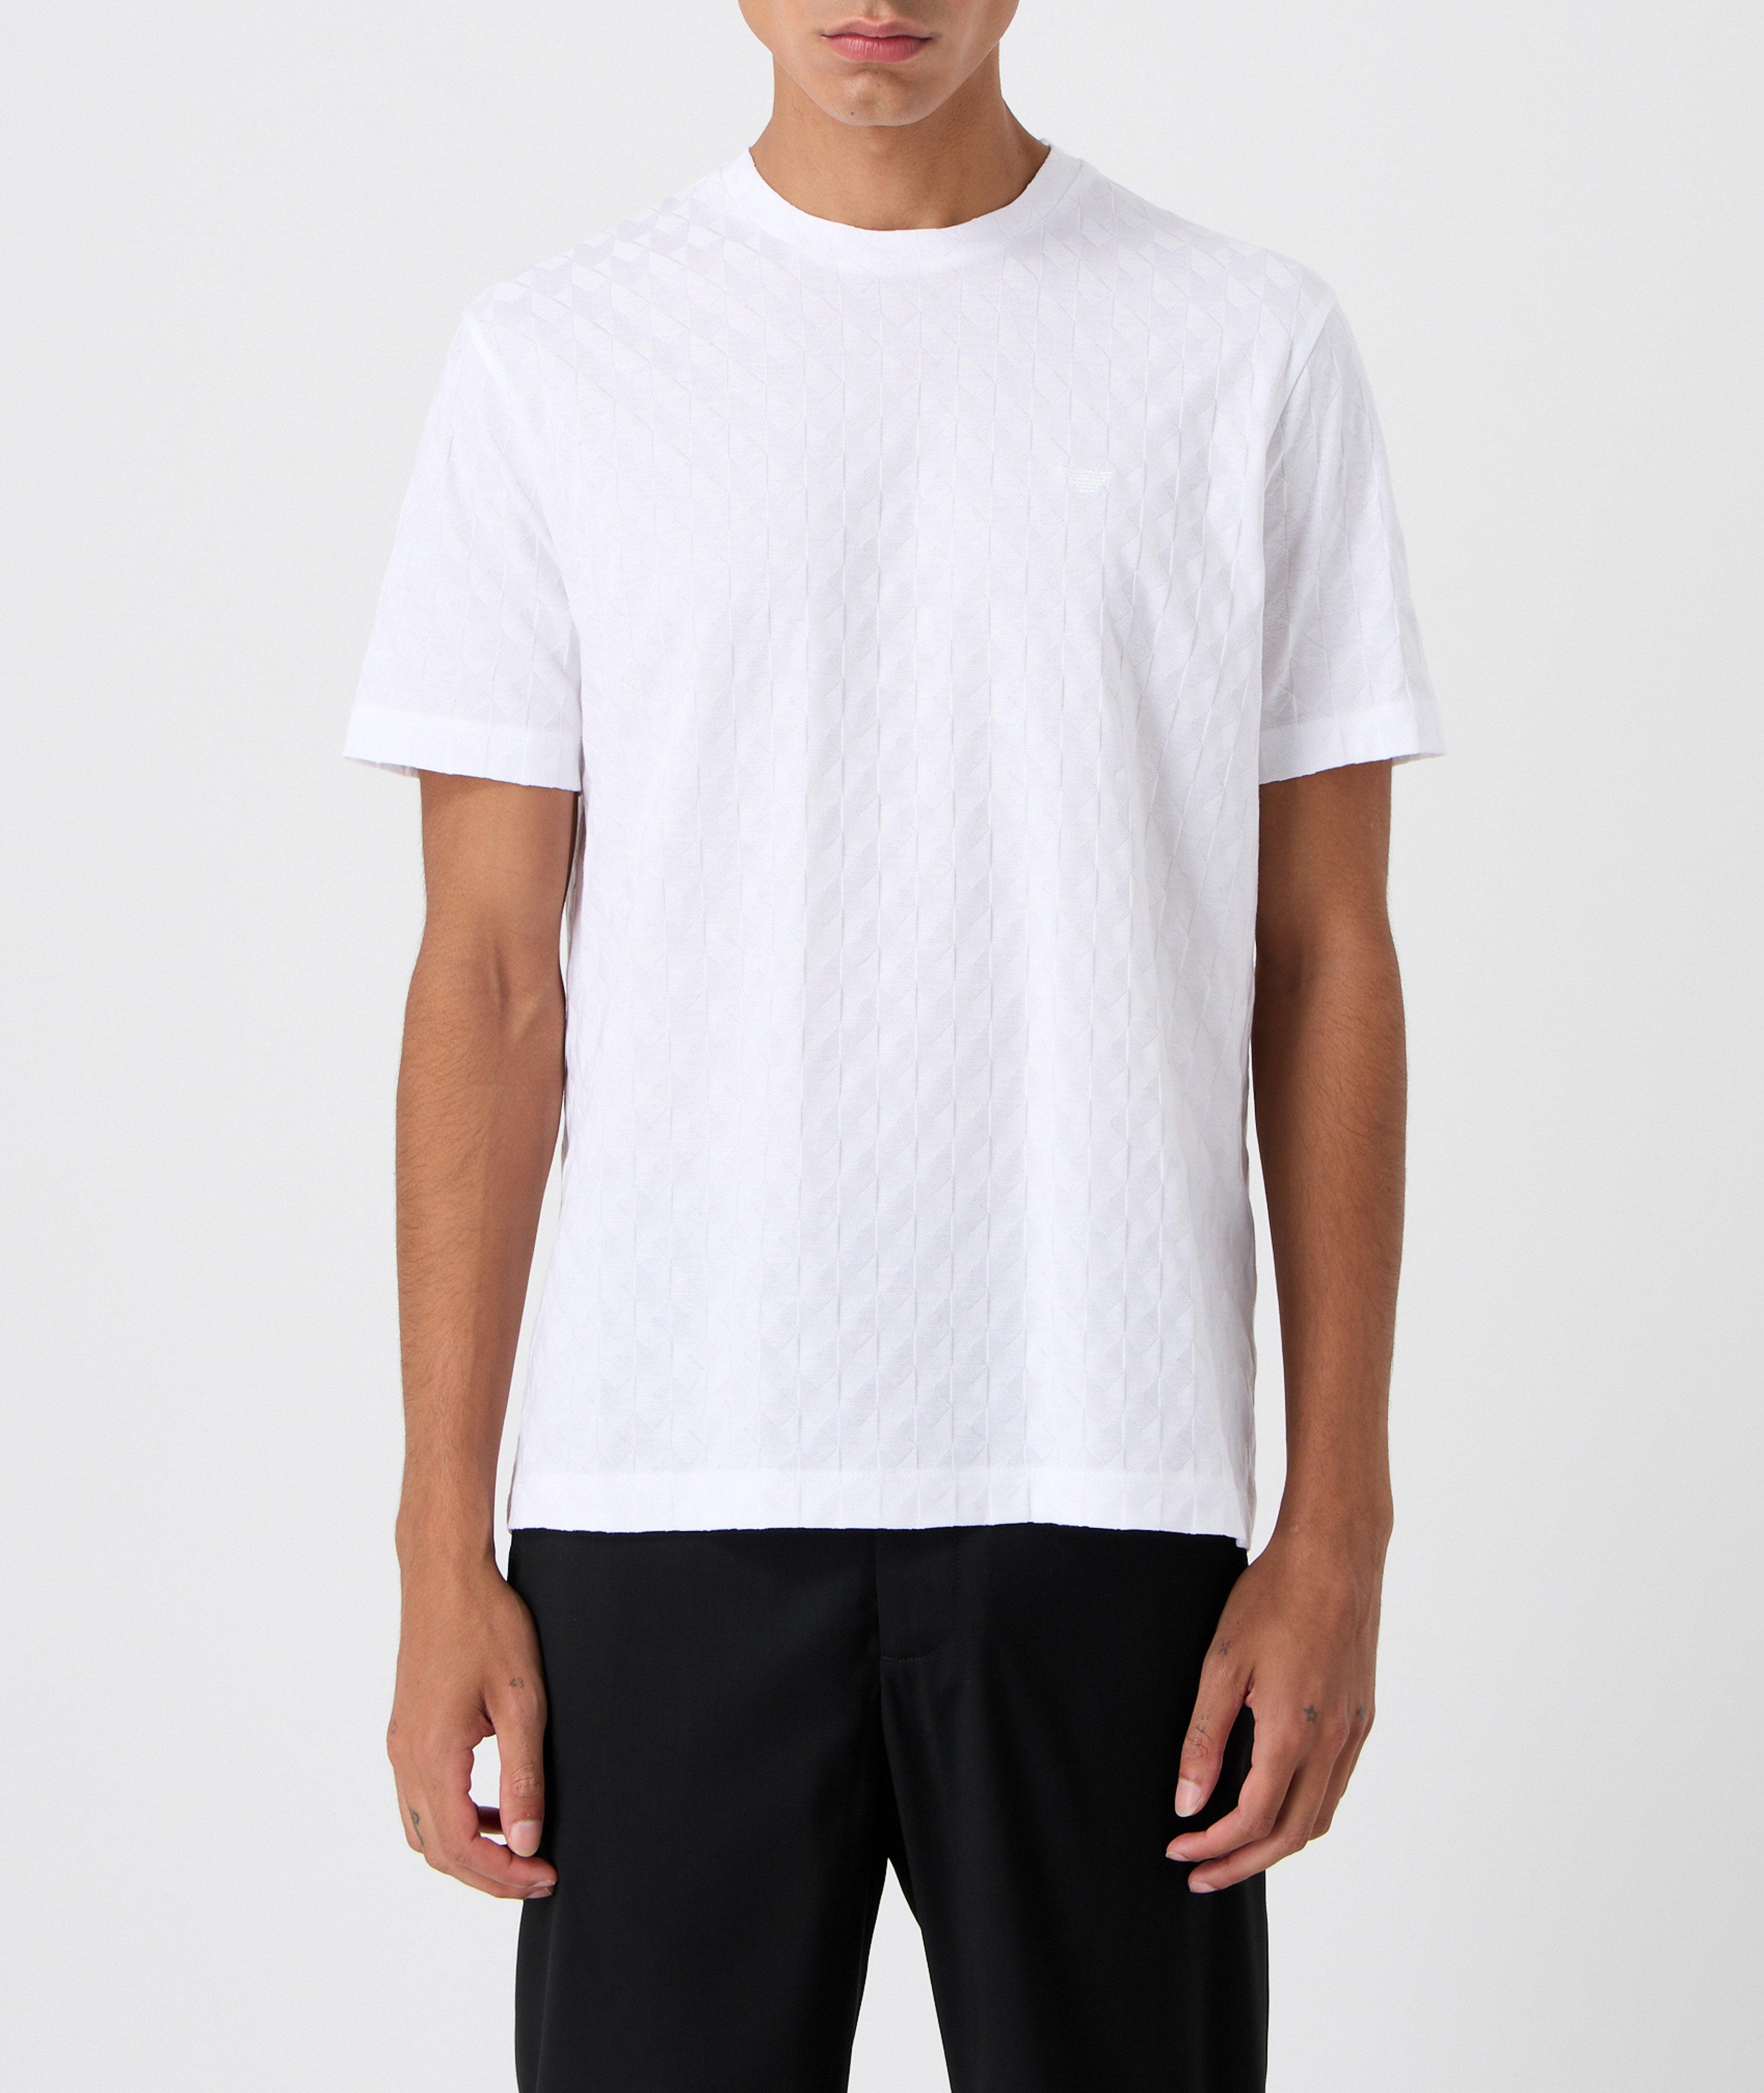 Jacquard Jersey Cotton T-Shirt image 1